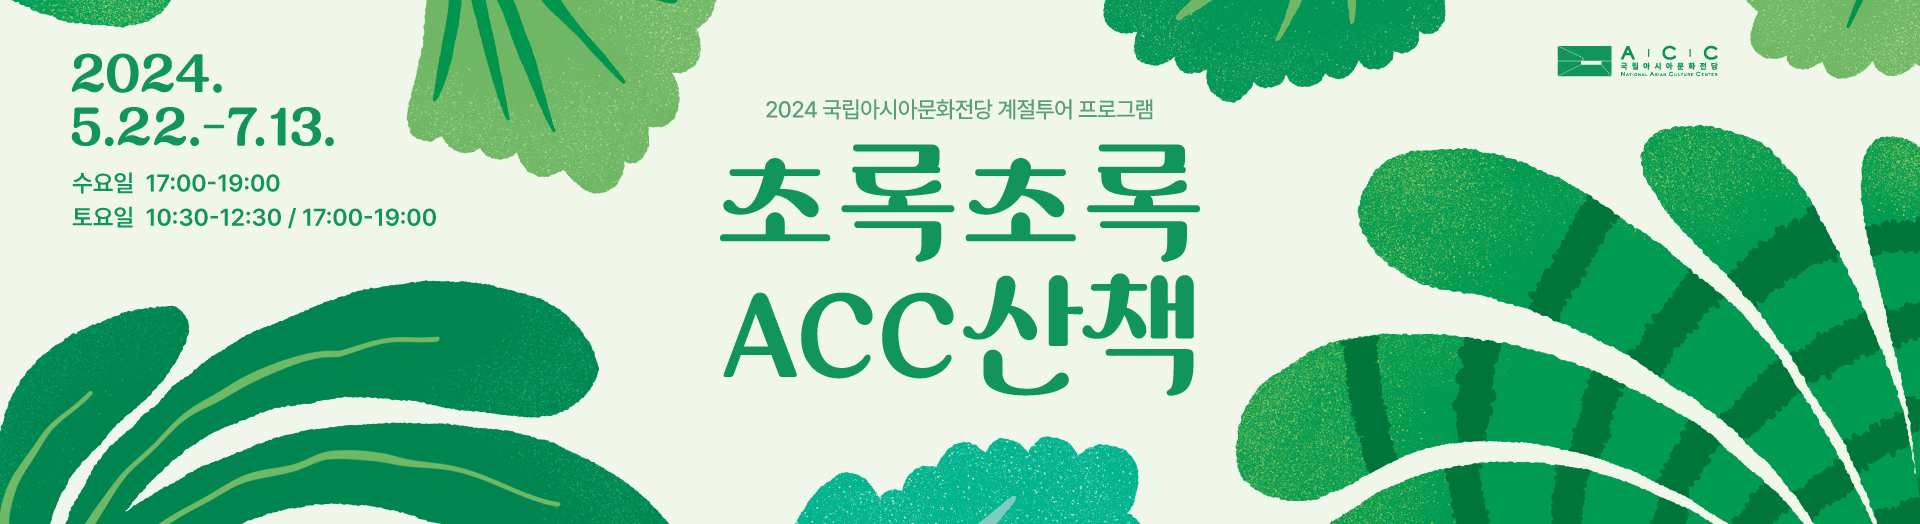 ACC Walk: Green & Green